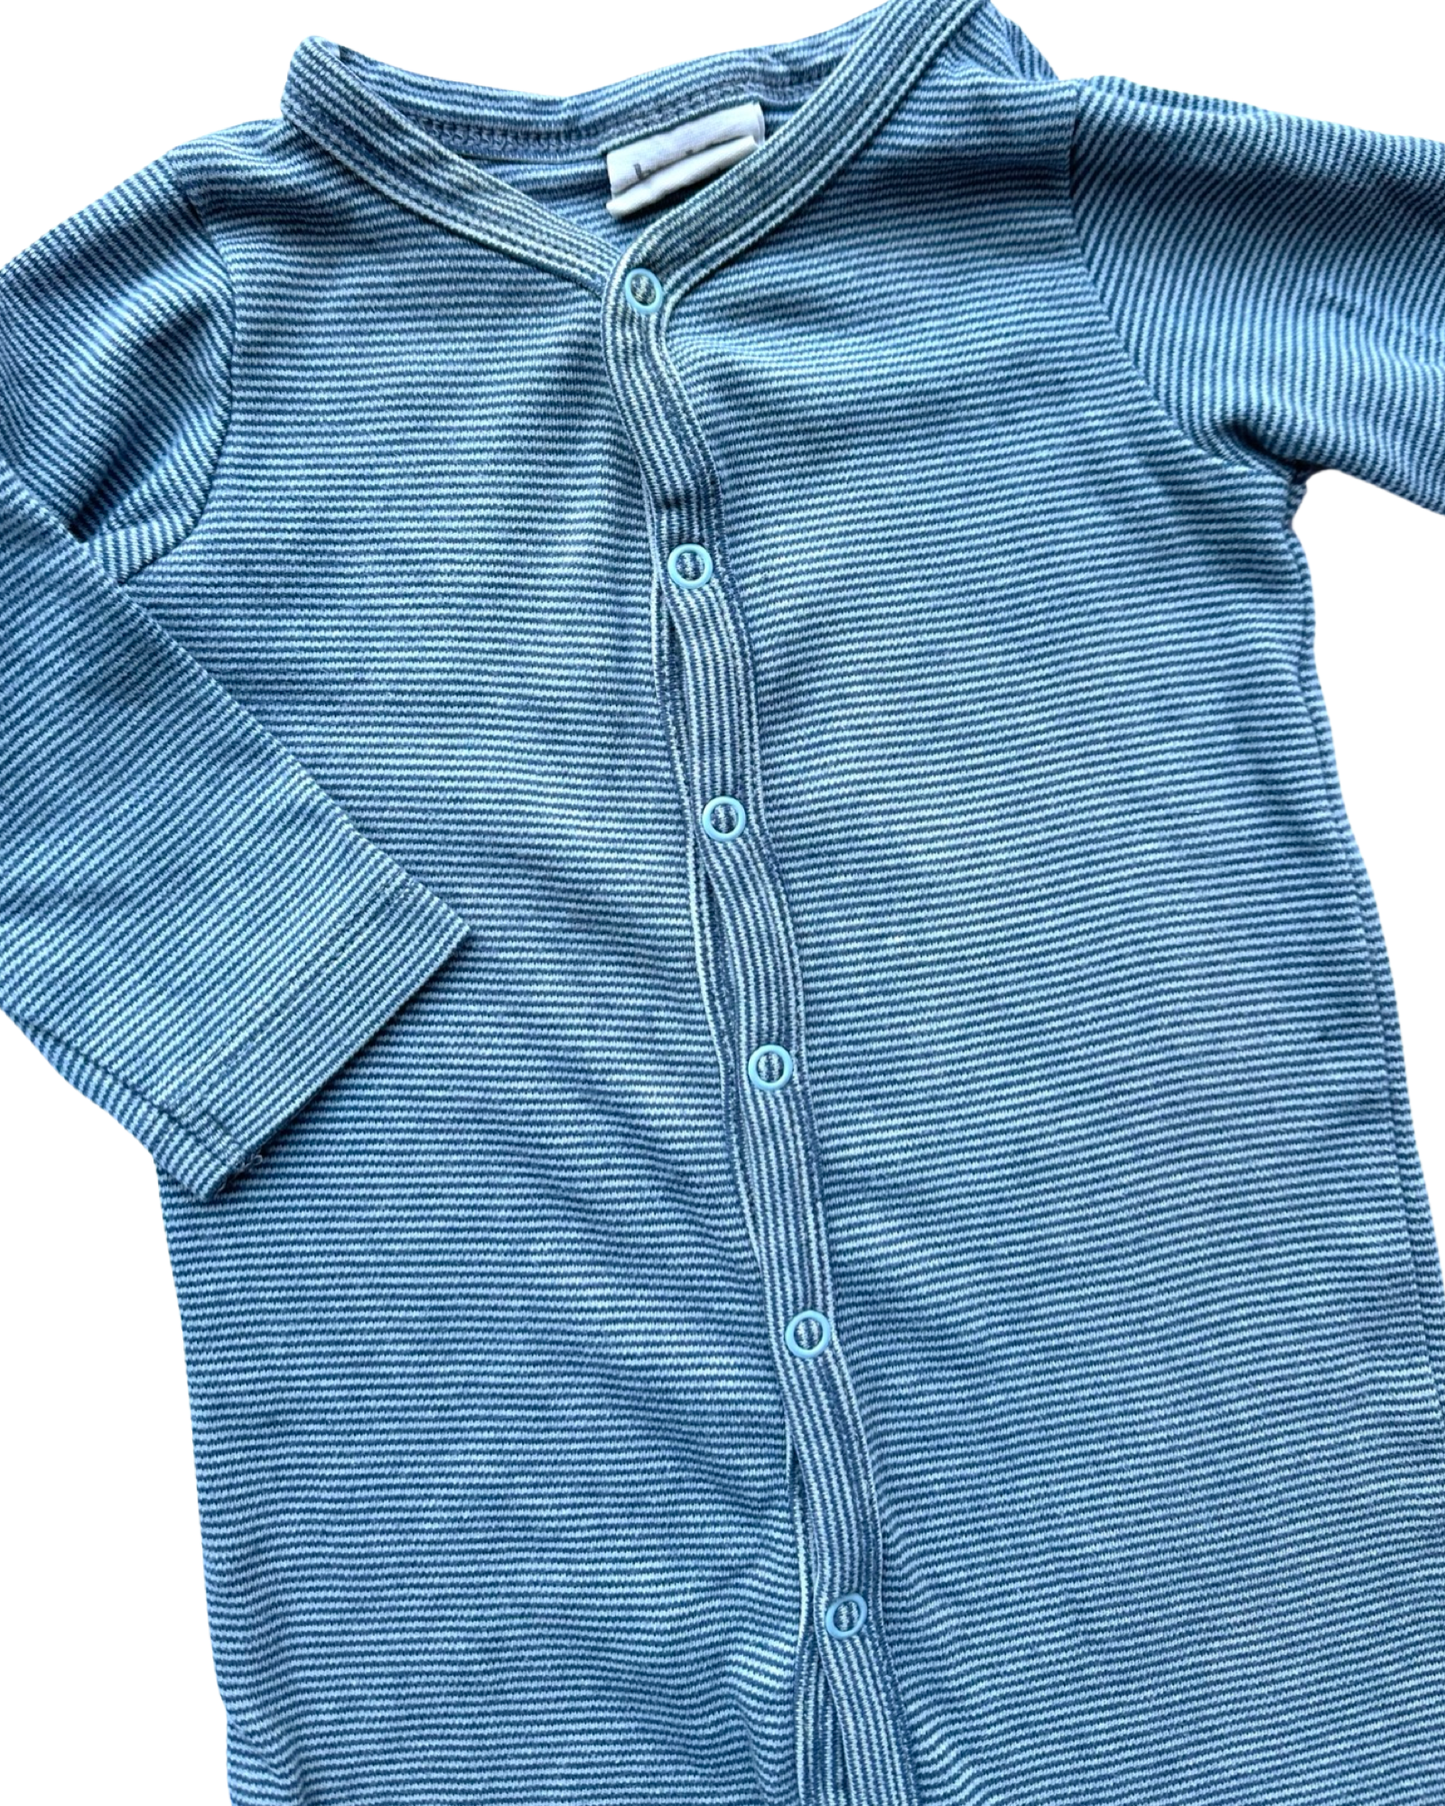 Buddy & Hope blue striped organic cotton sleepsuit (size 3-6mths)